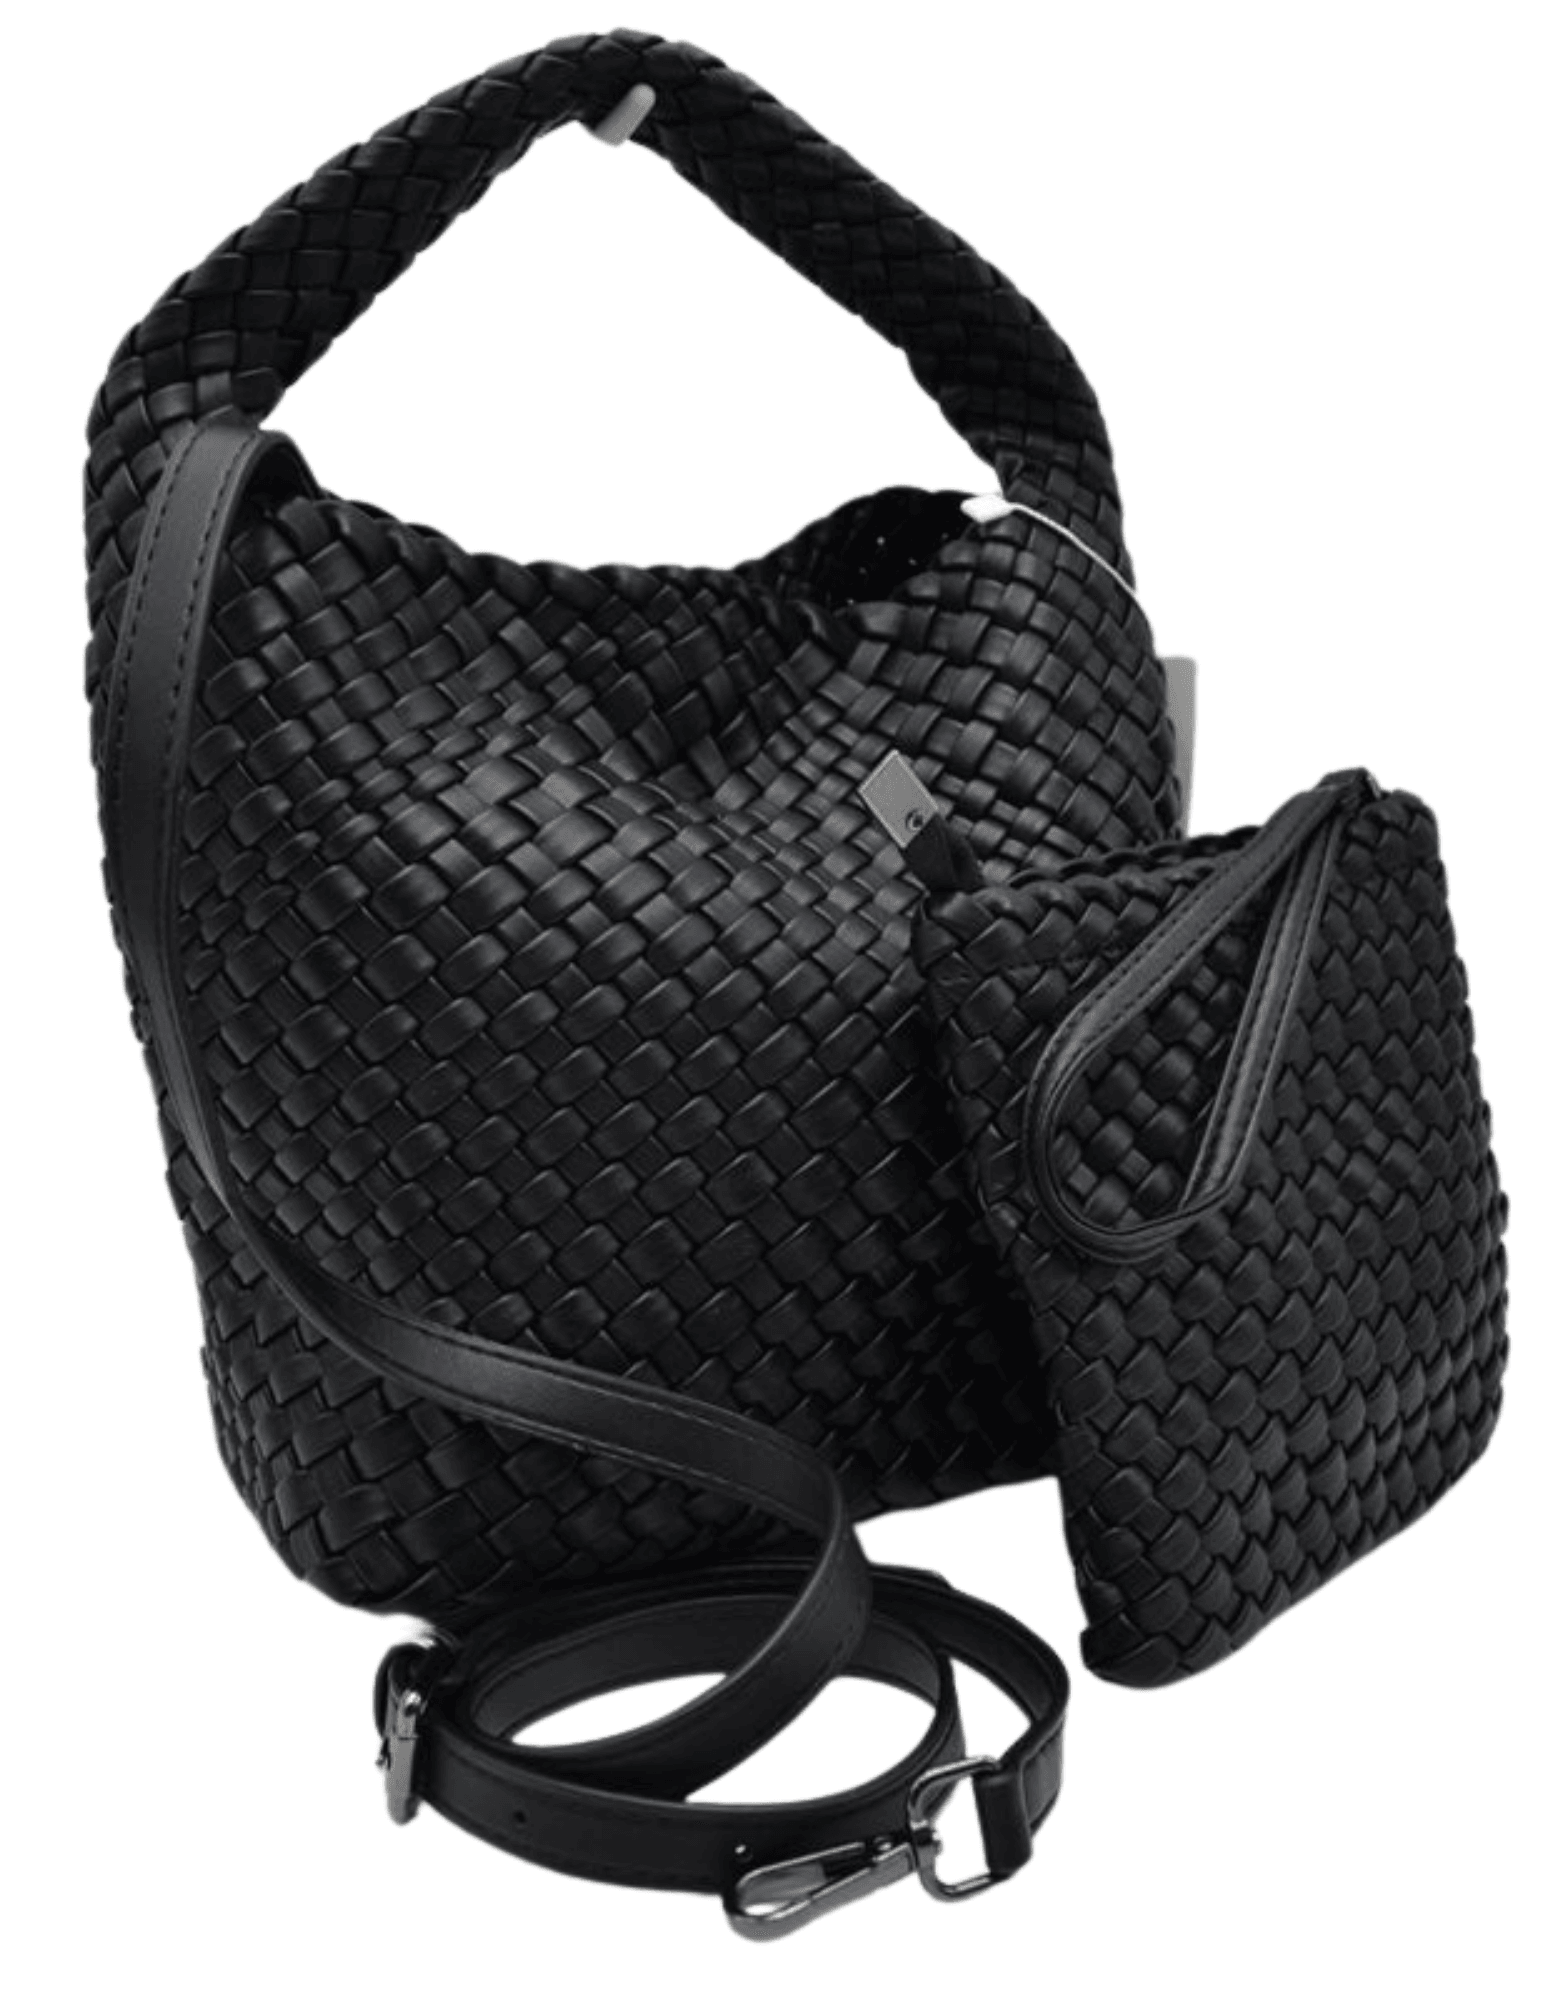 I IHAYNER Womens Leather Handbags Purses Top-handle Totes Satchel Shoulder  Bag for Ladies with Pompon Black: Handbags: Amazon.com